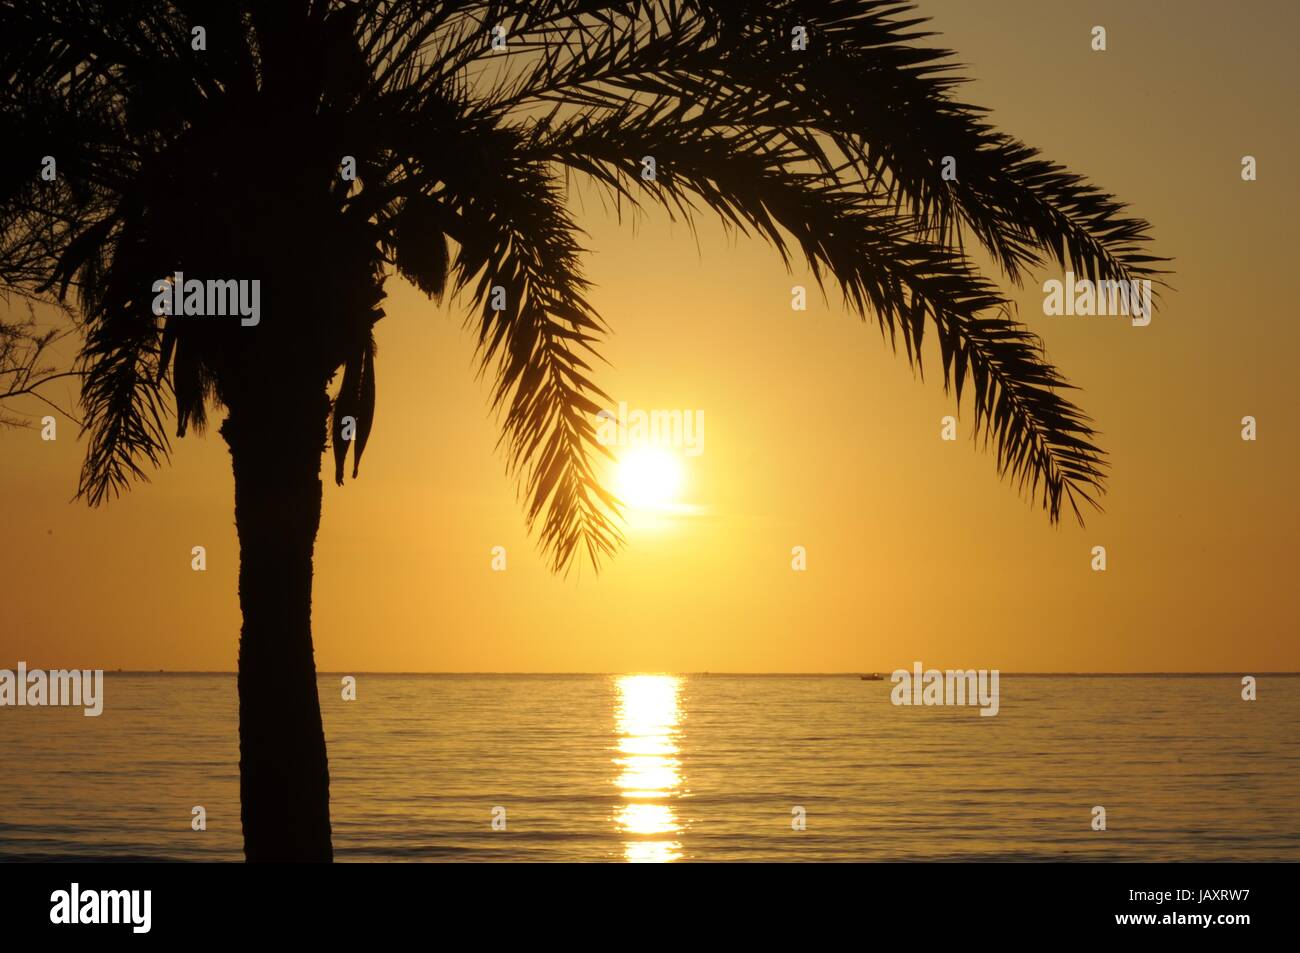 palme, Baum,  MorgendÃ¤mmerung, morgen , himmel, sonne, morgenhimmel, sÃ¼den, sonnenaufgang,  meer, kÃ¼ste, landschaft, natur, himmel, morgenrot, einzeln, romantisch, malerisch, fernreise, exotisch, urlaub, fernweh, reise, tourismus Stock Photo